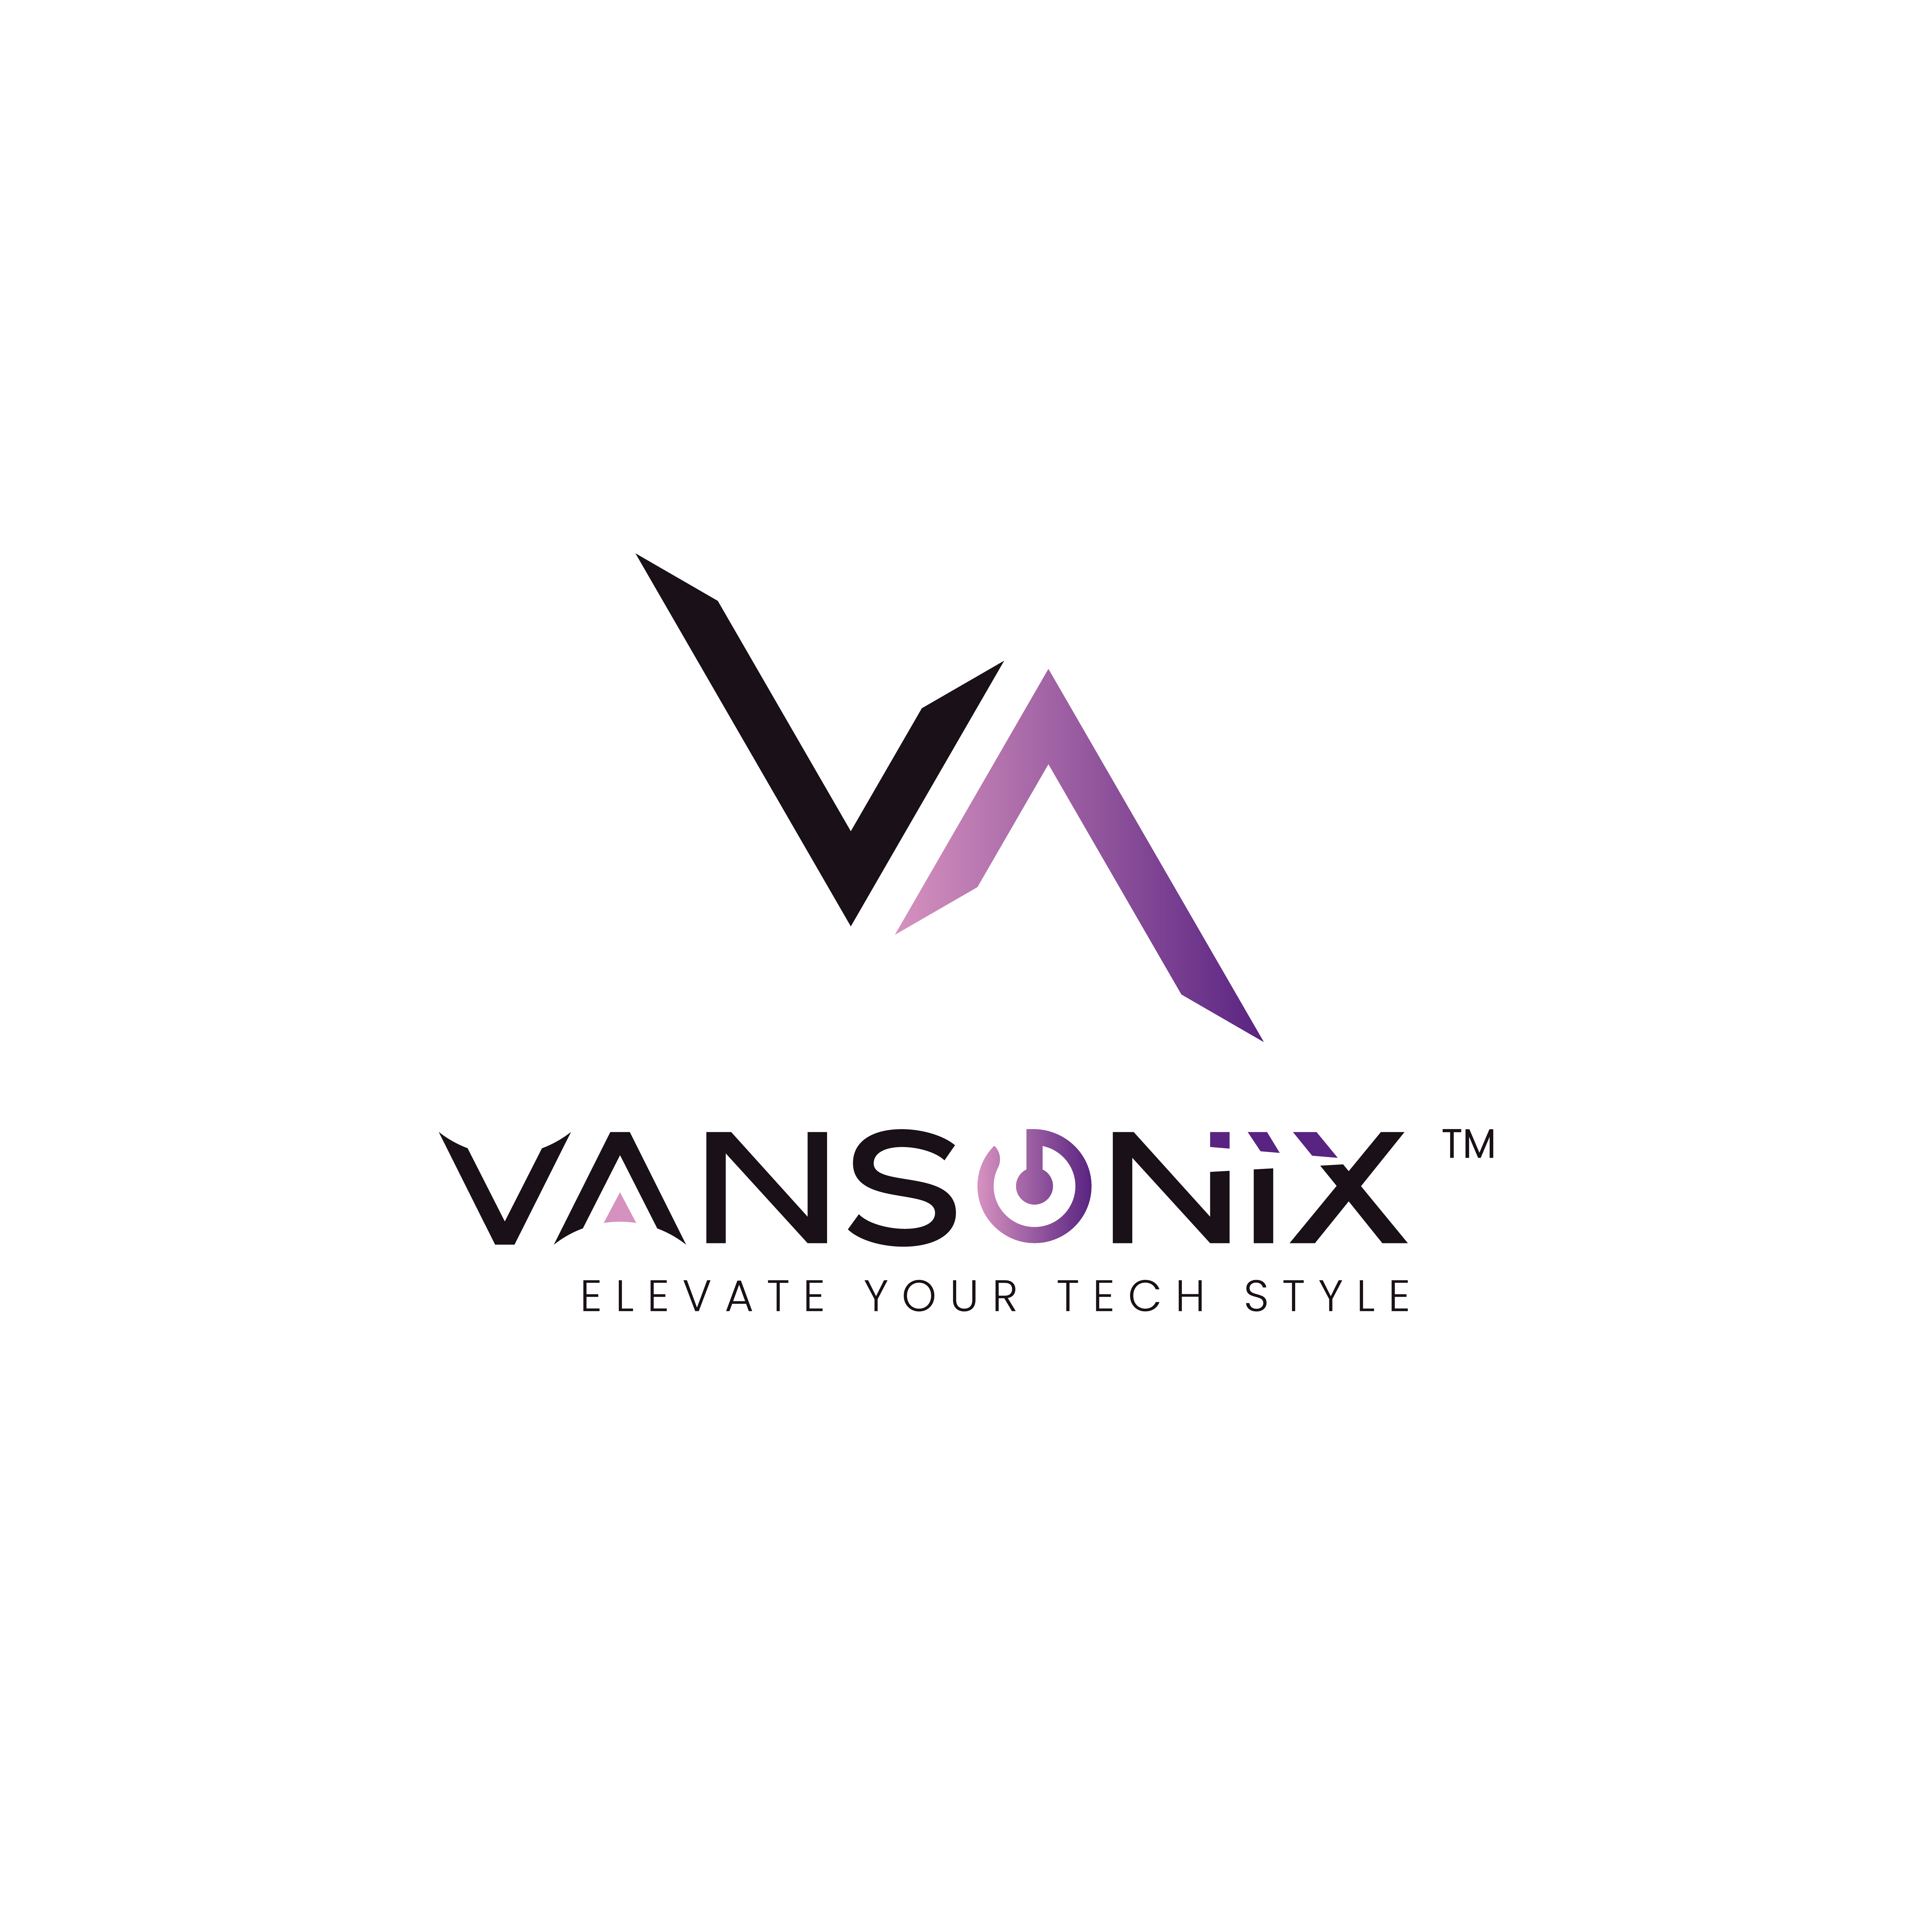 Vansonix Lifestyles تطلق سماعات أذن بلوتوث من الجيل التالي مع تجربة صوت فائقة